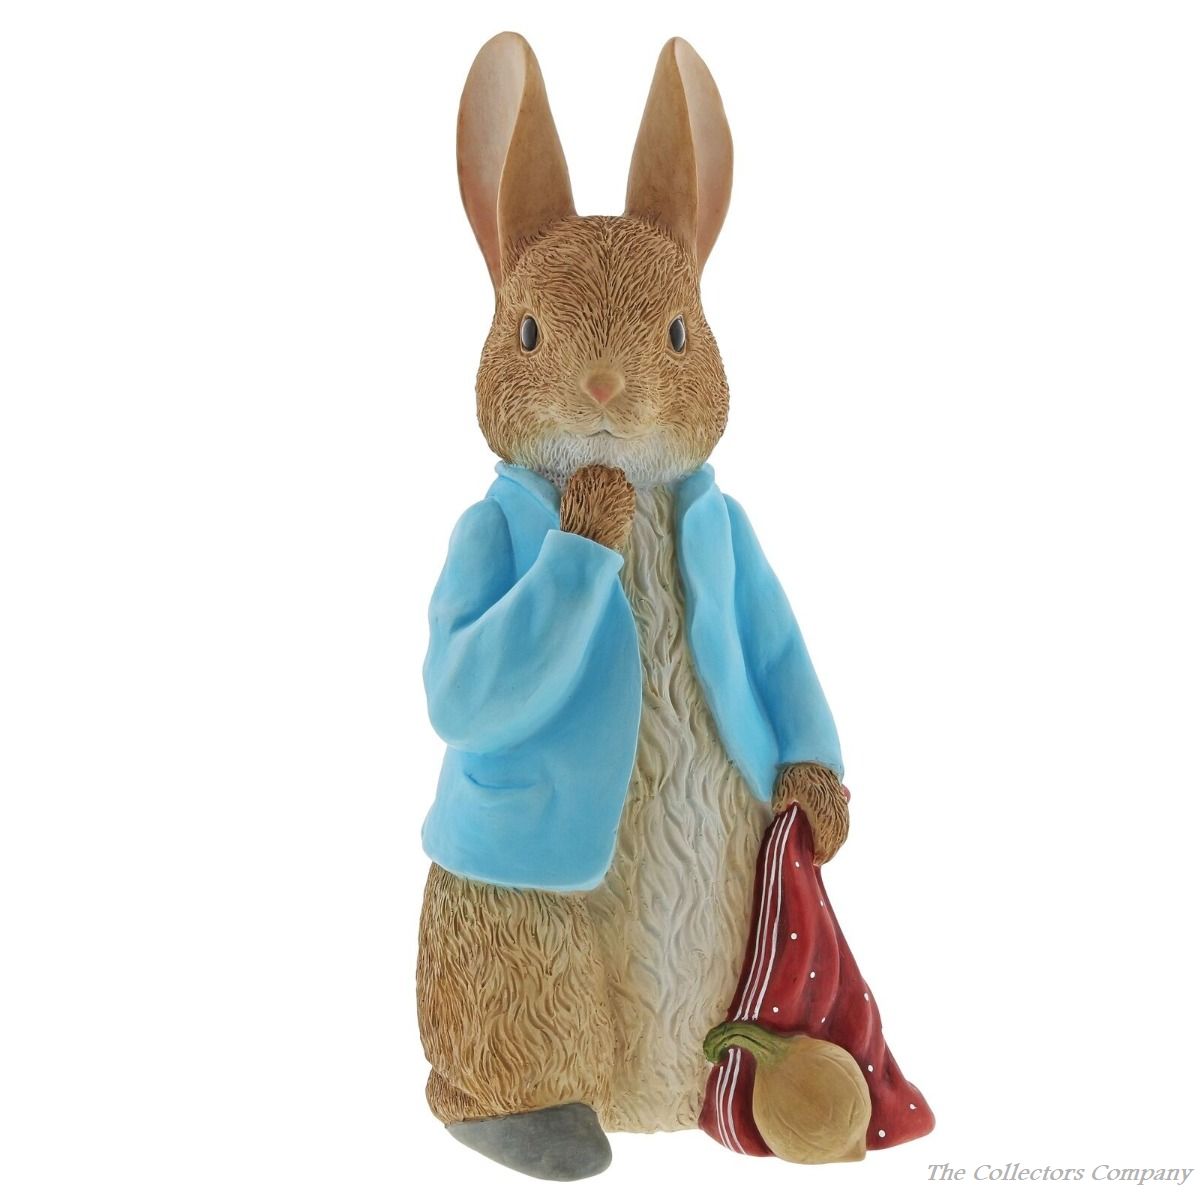 Peter Rabbit Large Statement Figurine A29995